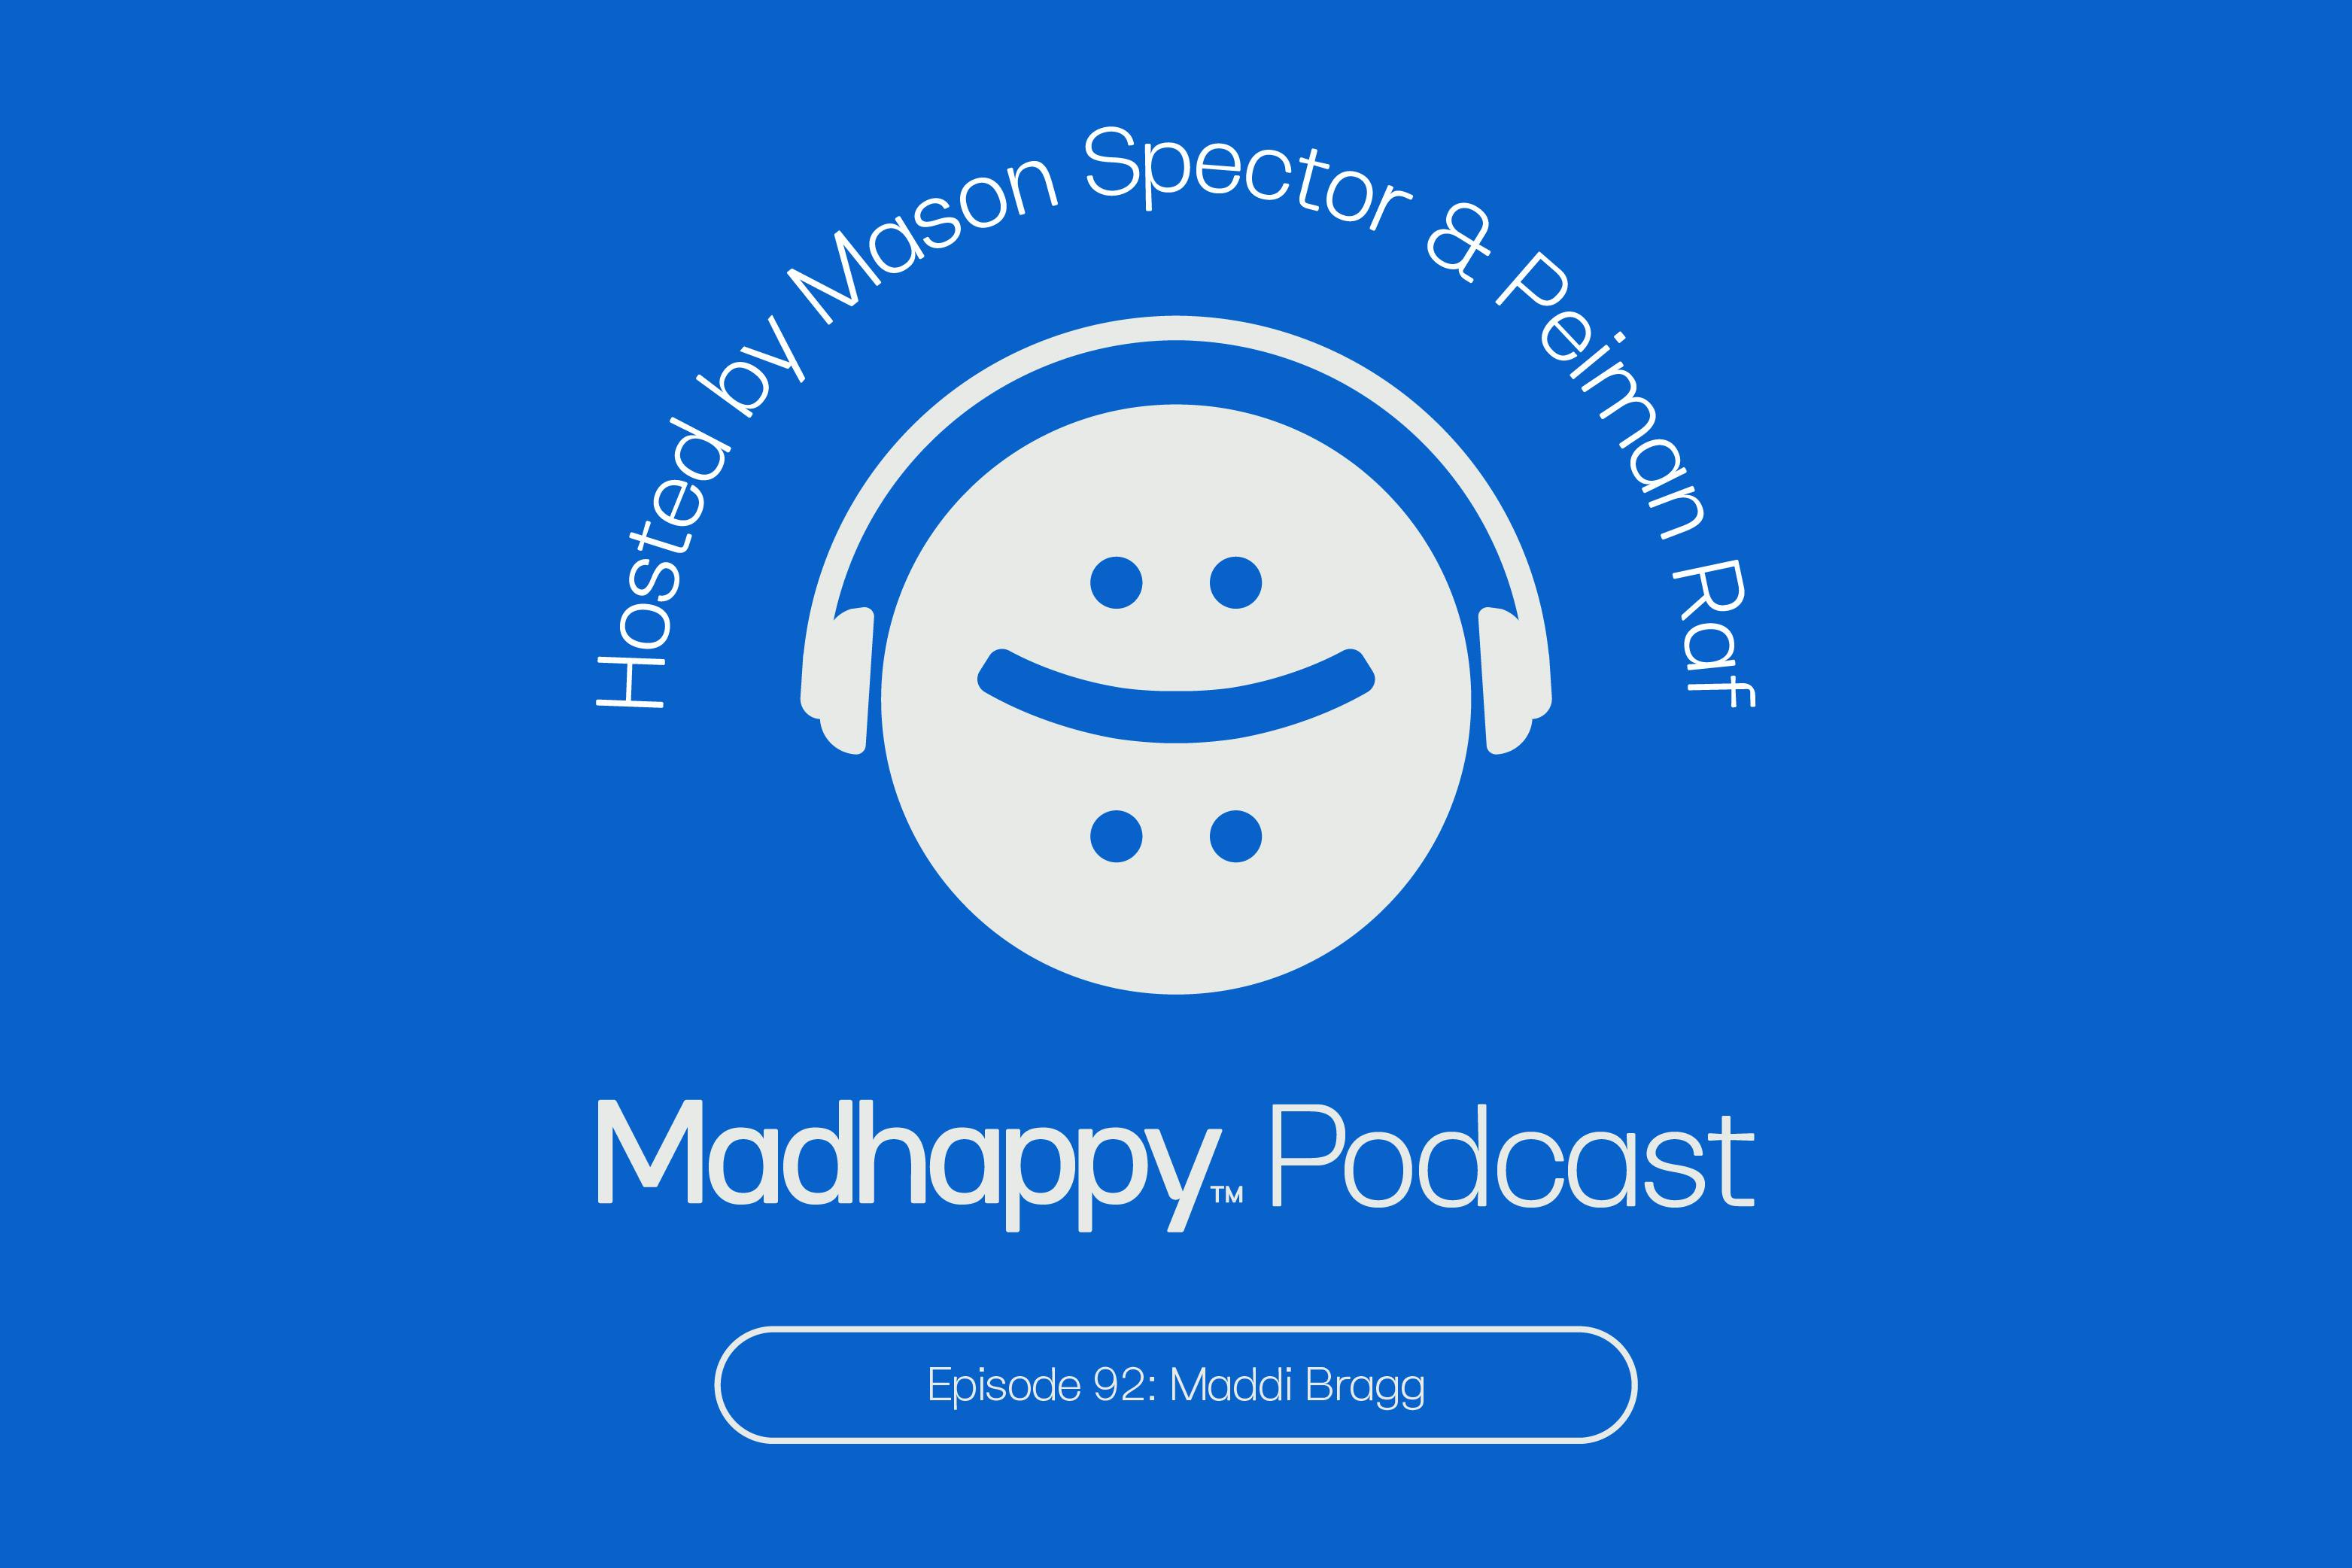 Episode 92: Maddi Bragg on YouTube, Change, and Mental Health